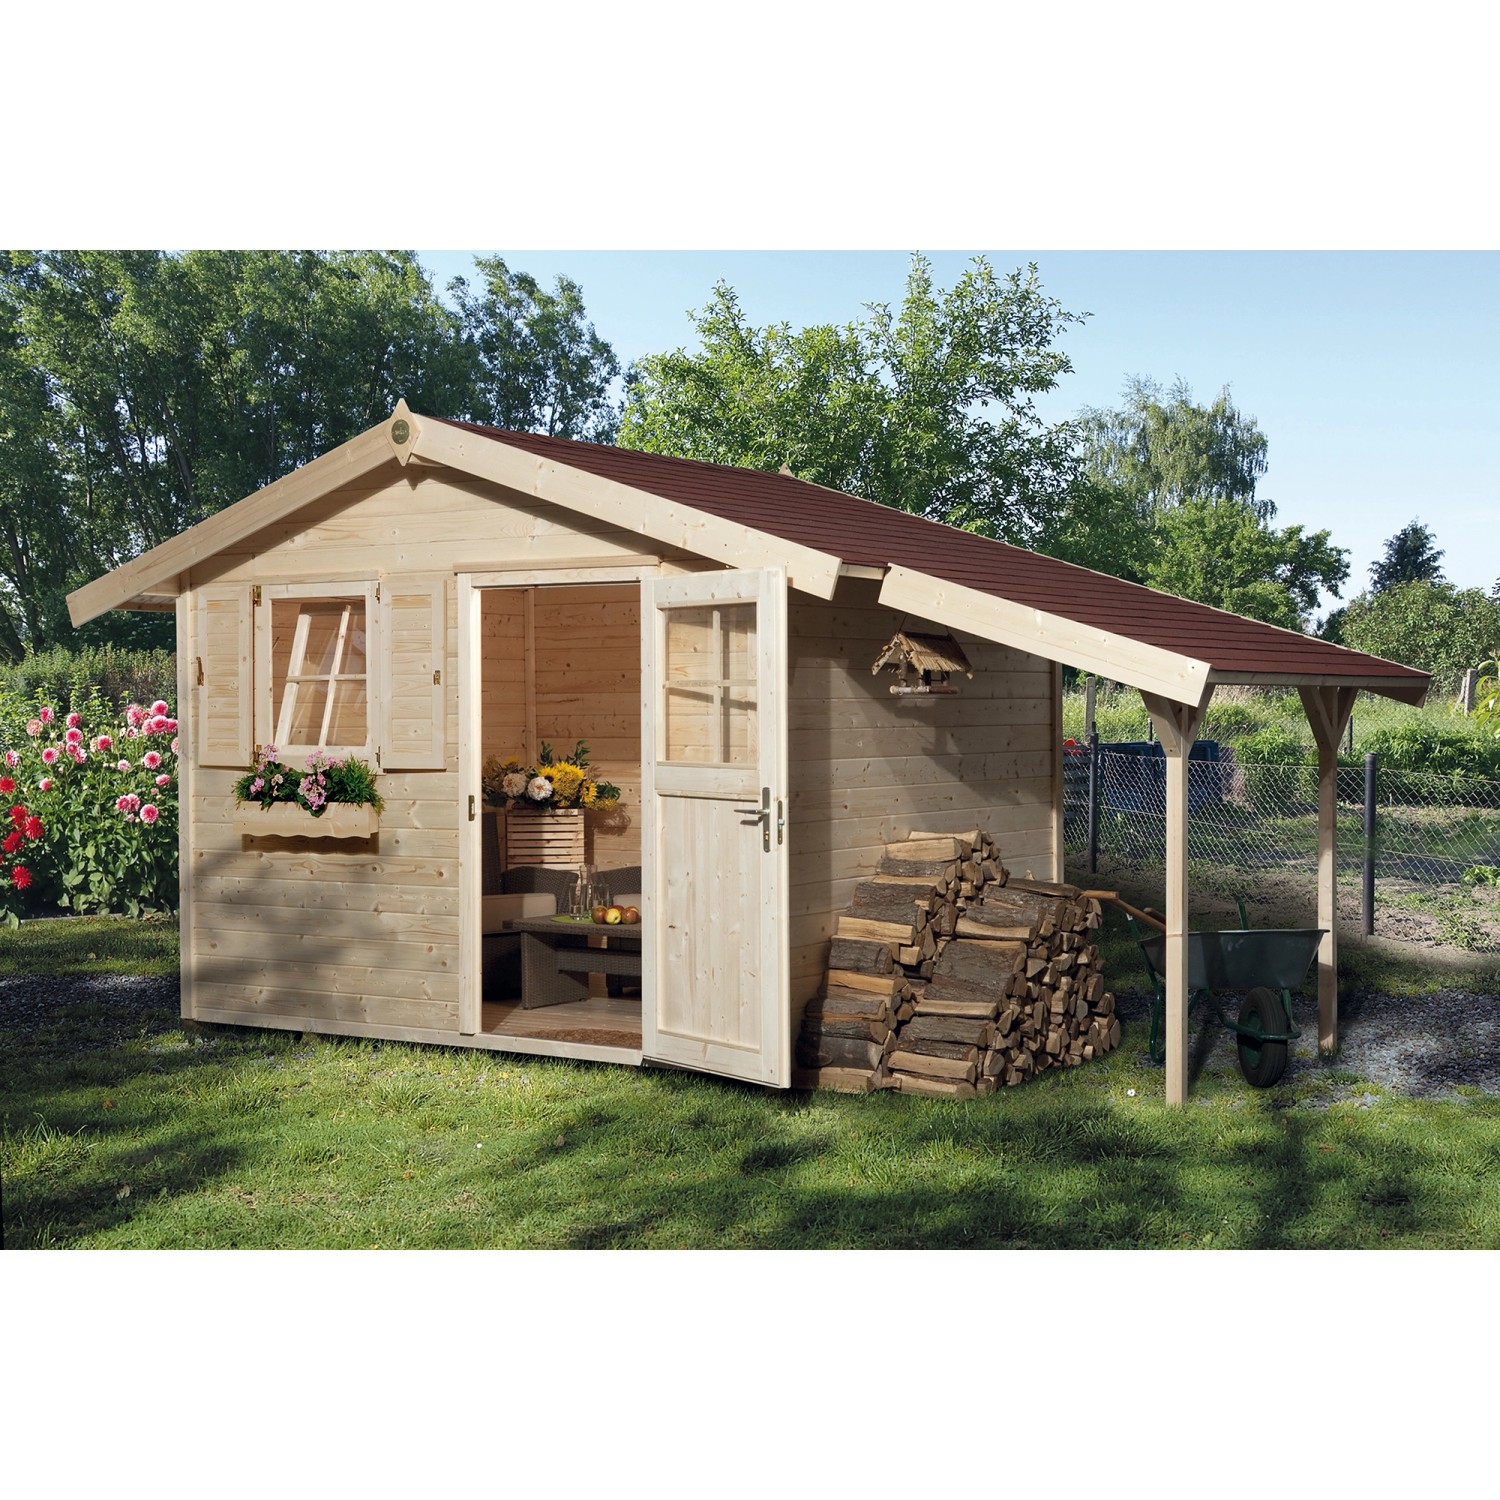 OBI Outdoor Living Holz-Gartenhaus Bozen Satteldach Unbehandelt 420 cm x 270 cm von OBI Outdoor Living